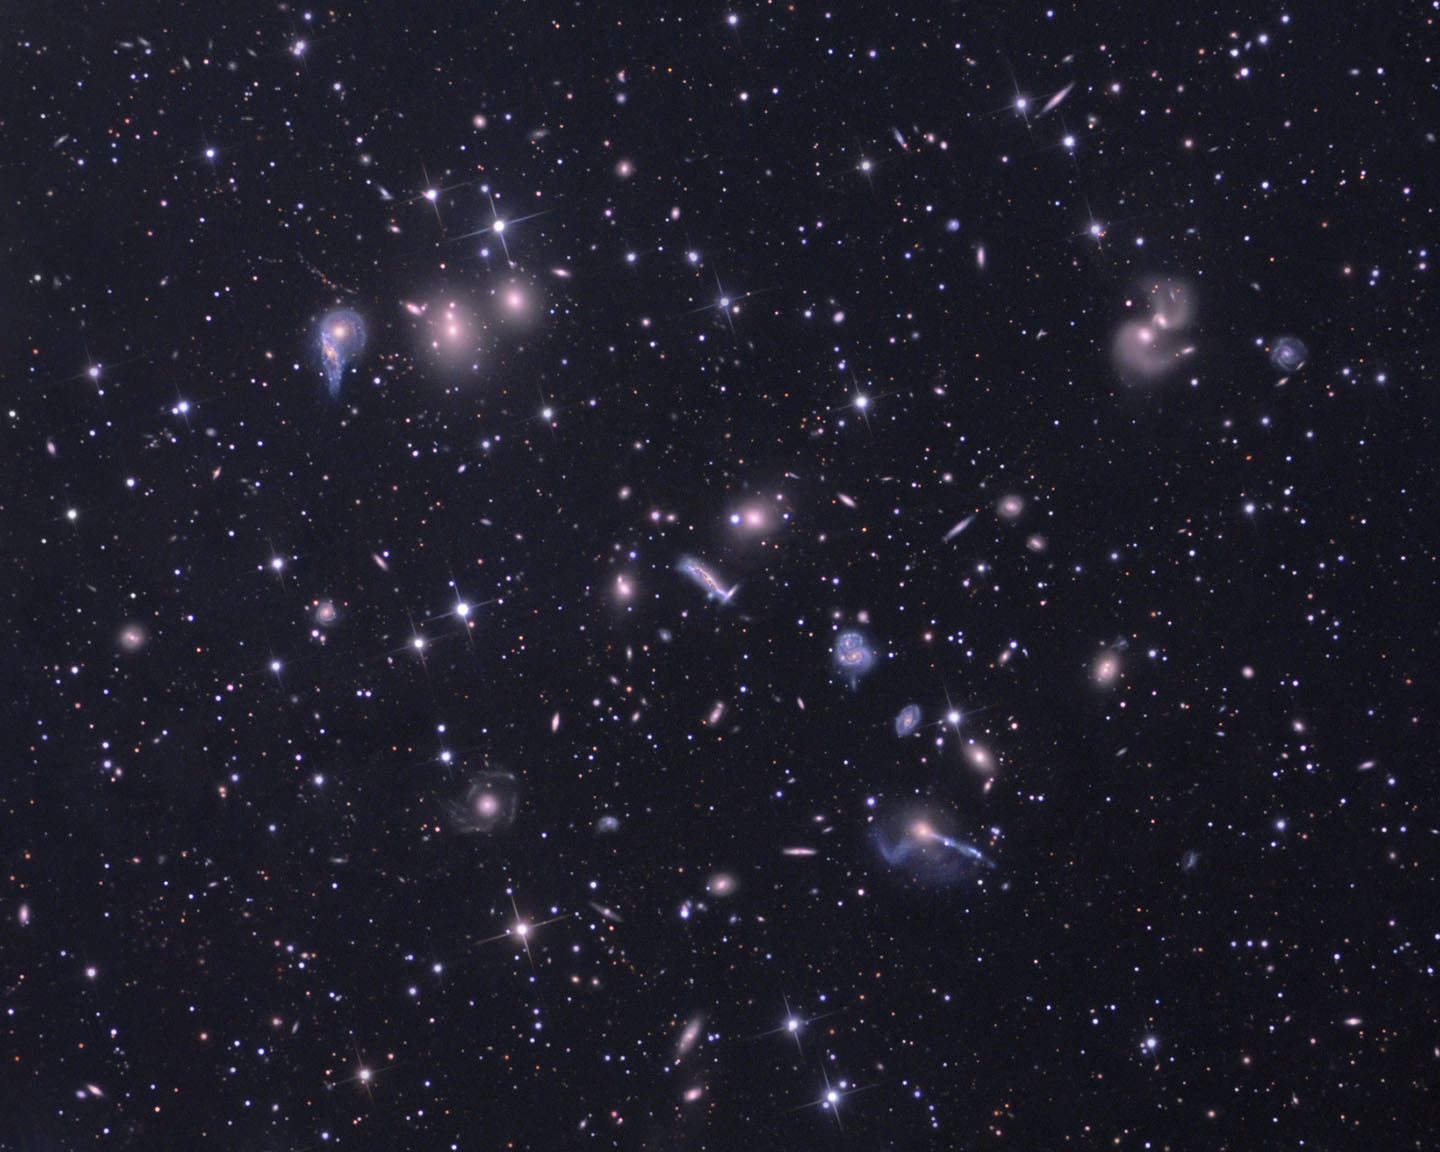 The Hercules Cluster of Galaxies